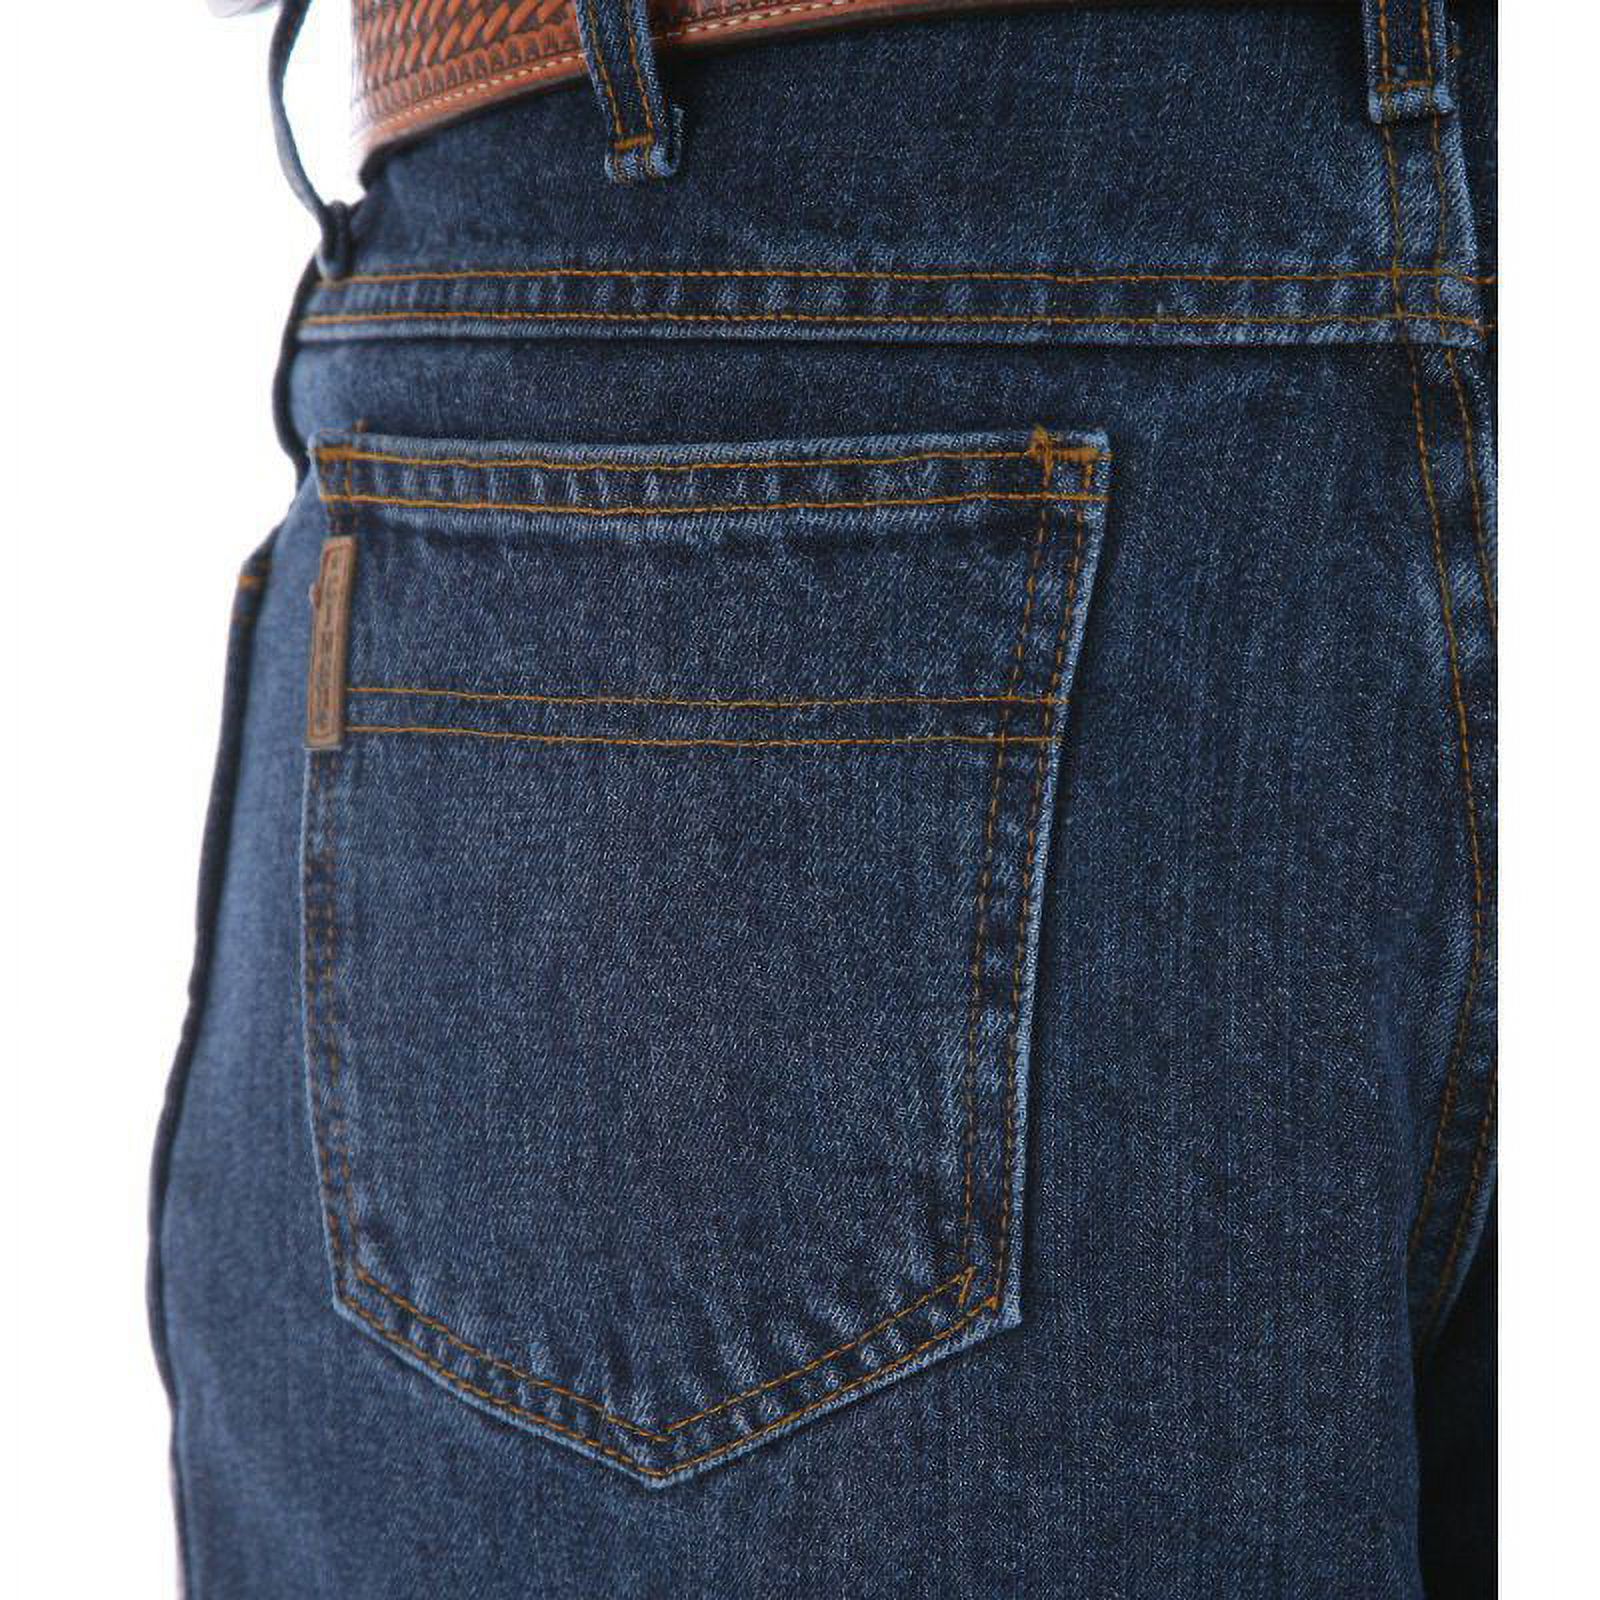 Cinch Apparel Mens Green Label Original Fit Jeans 40x36 Dark Stonewash - image 3 of 4